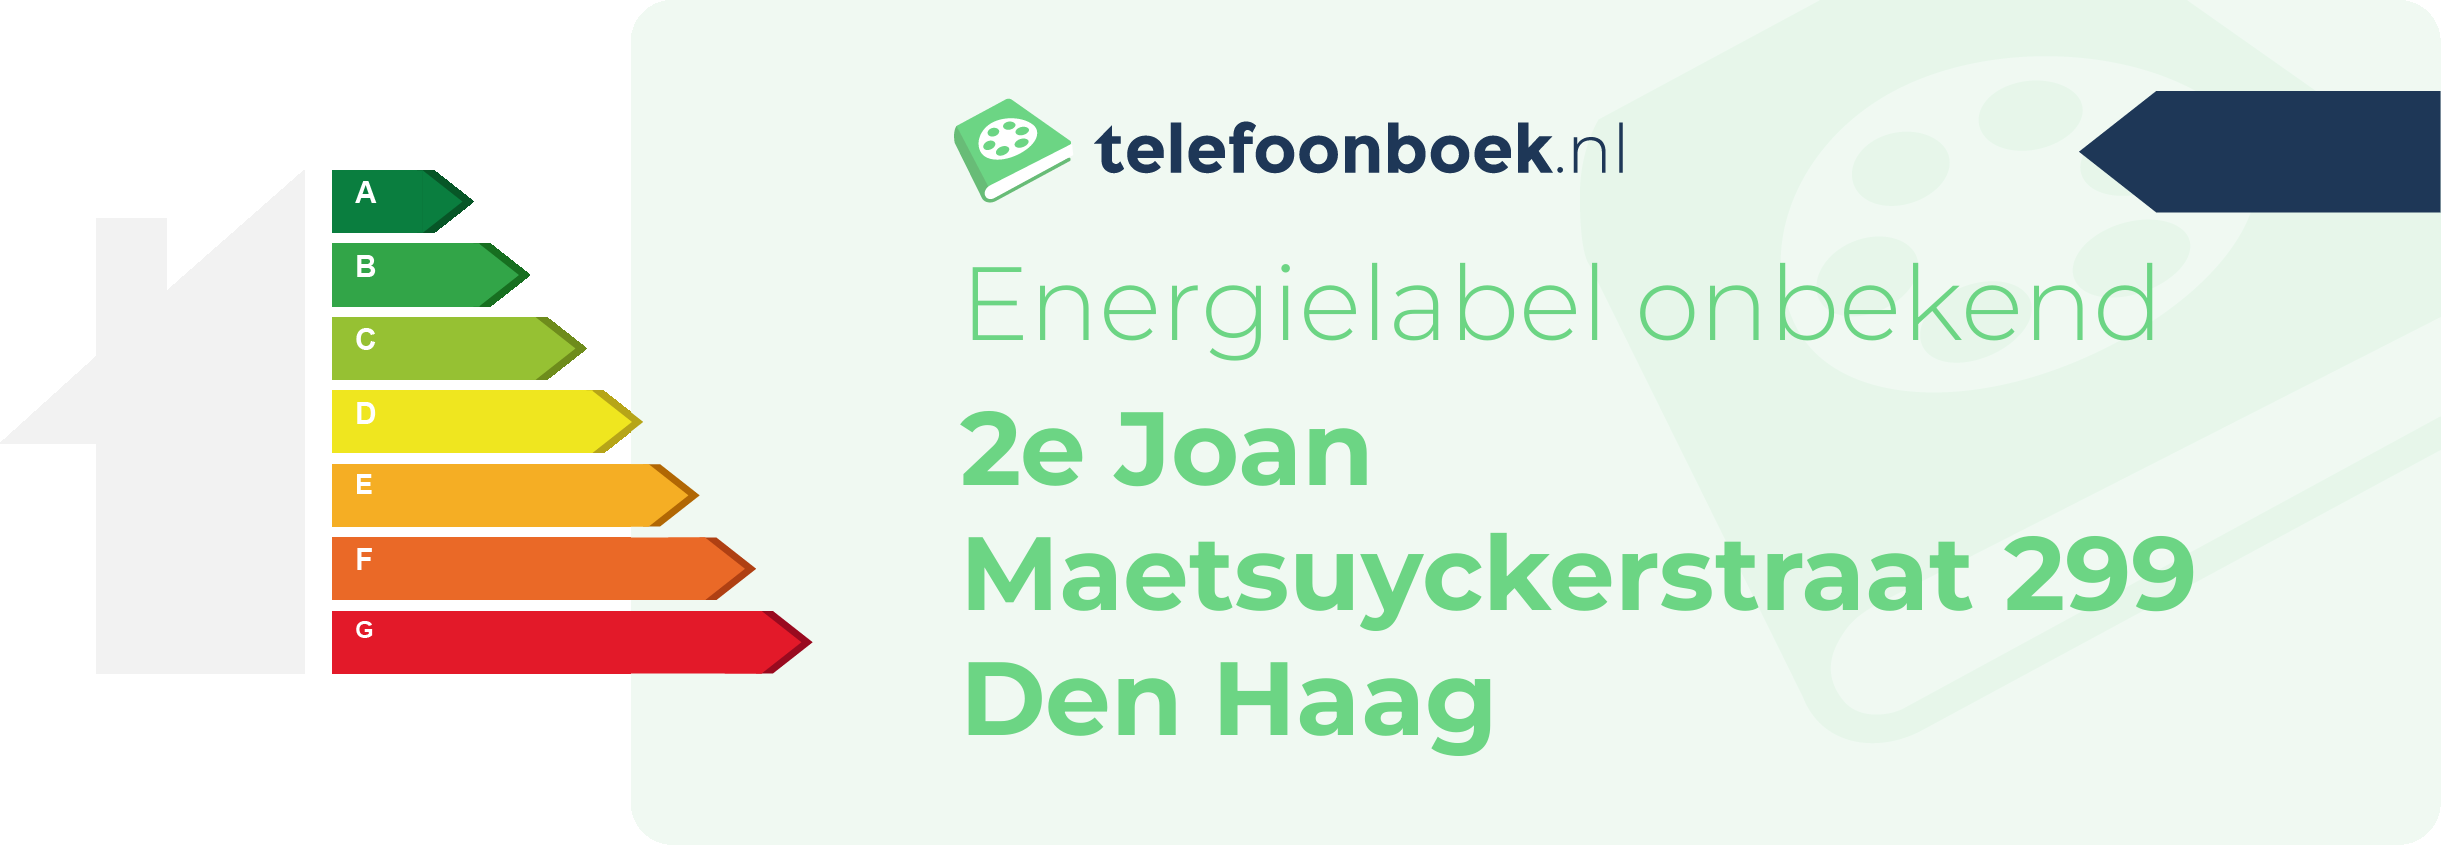 Energielabel 2e Joan Maetsuyckerstraat 299 Den Haag